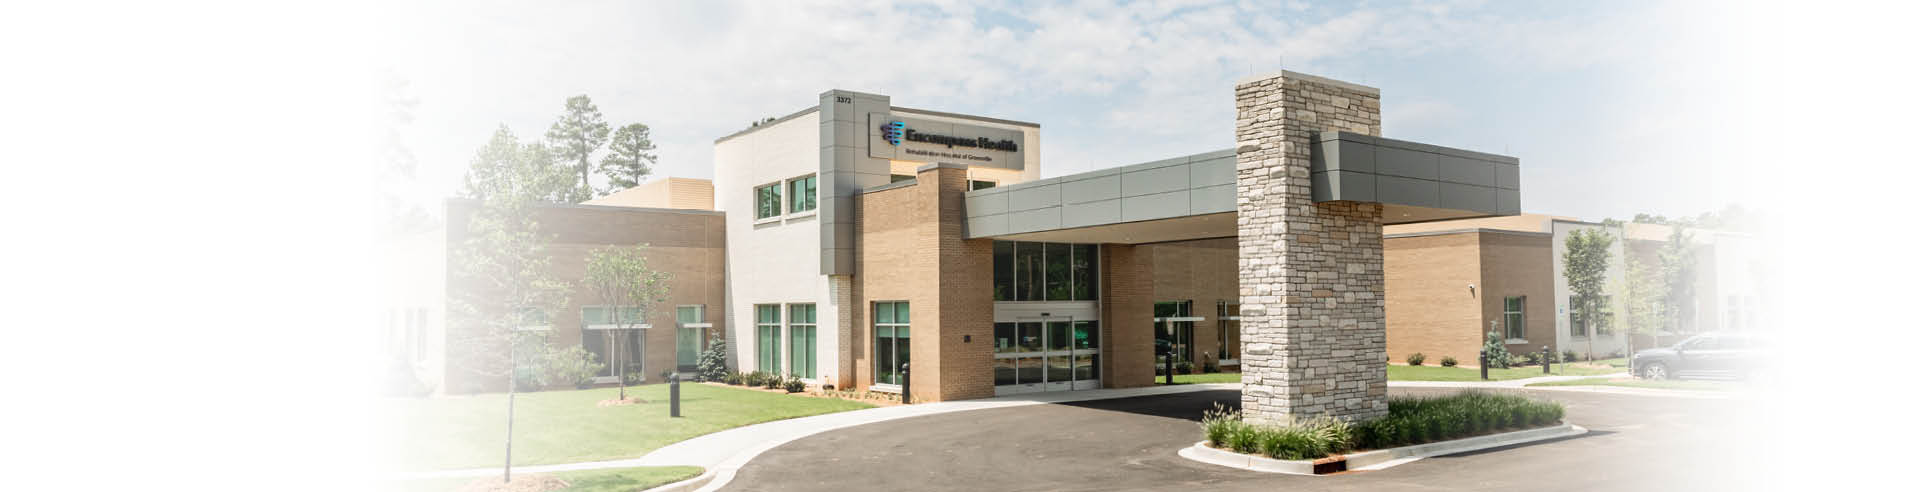   Encompass Health Rehabilitation Hospital of Greenville exterior